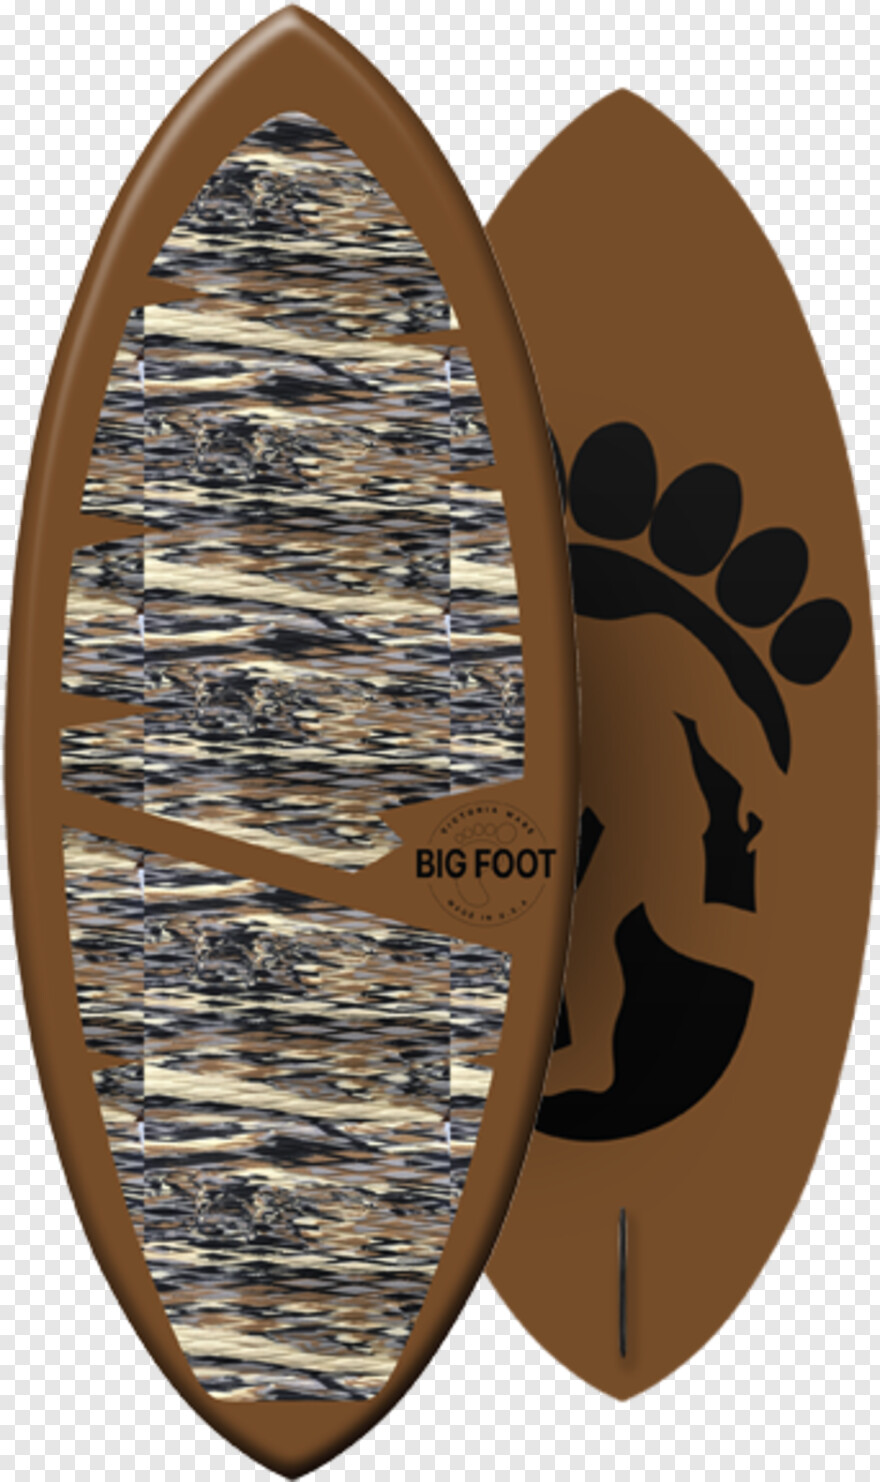 bigfoot # 364459